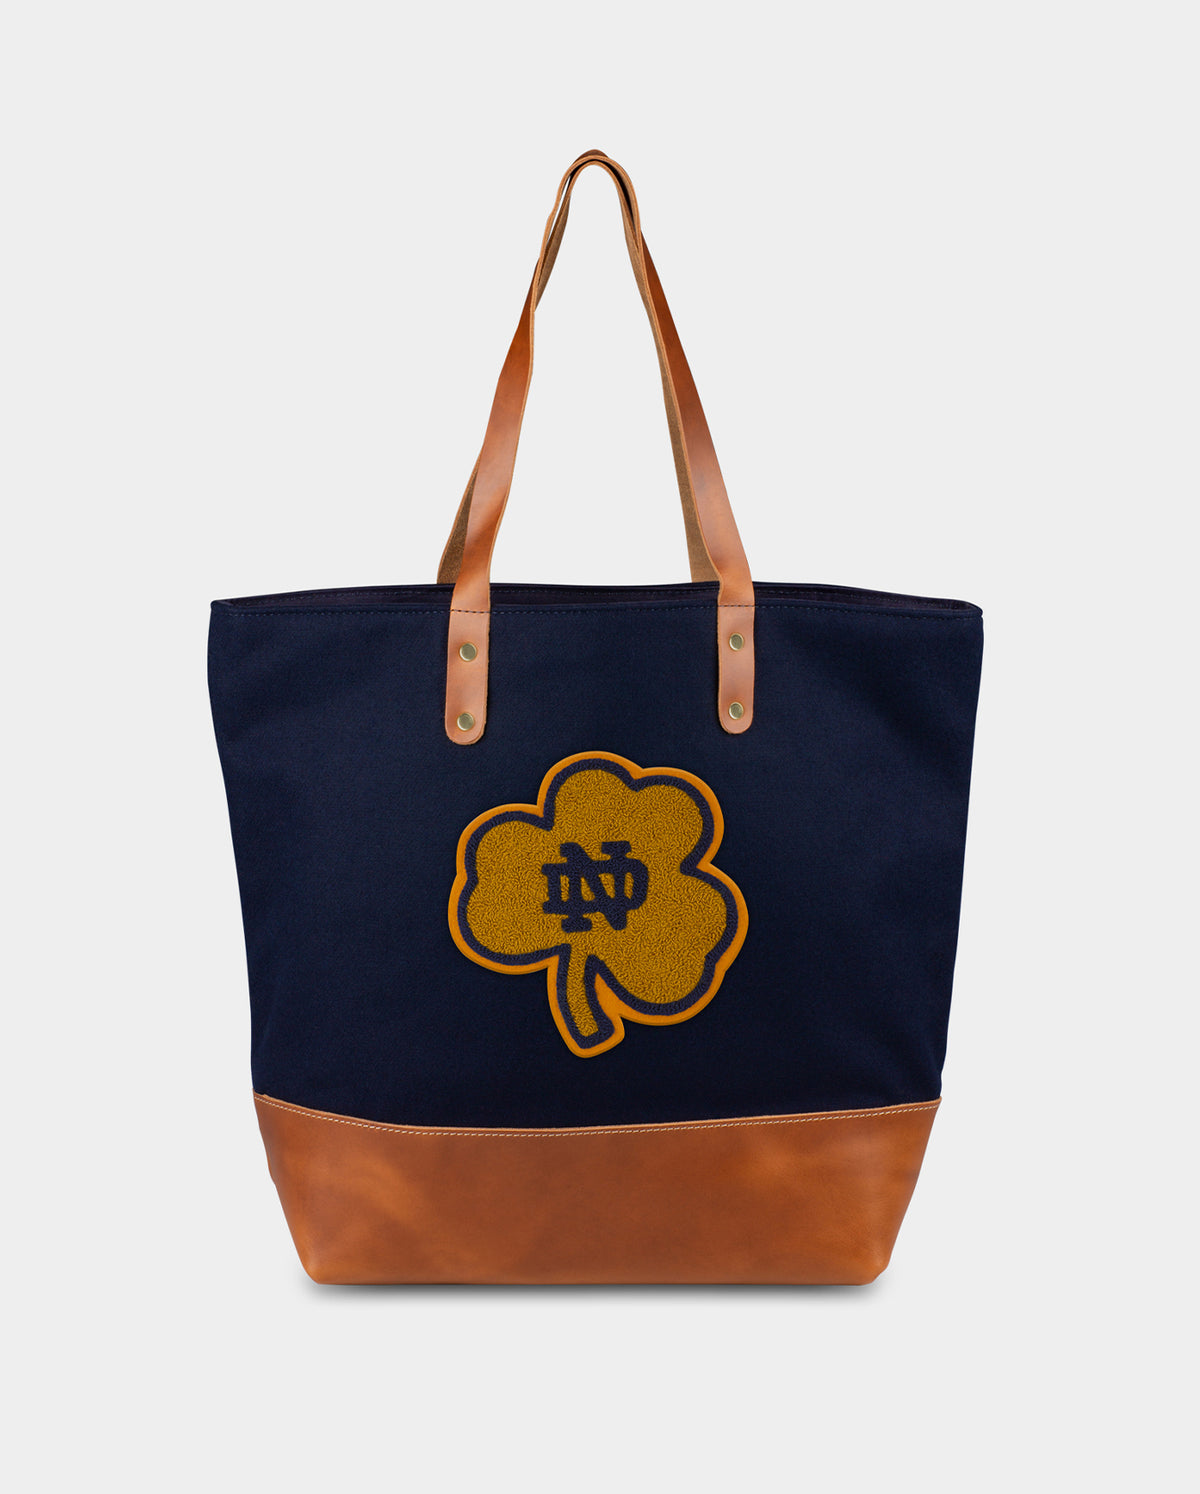 Notre Dame Navy Tote Bag "Clover"